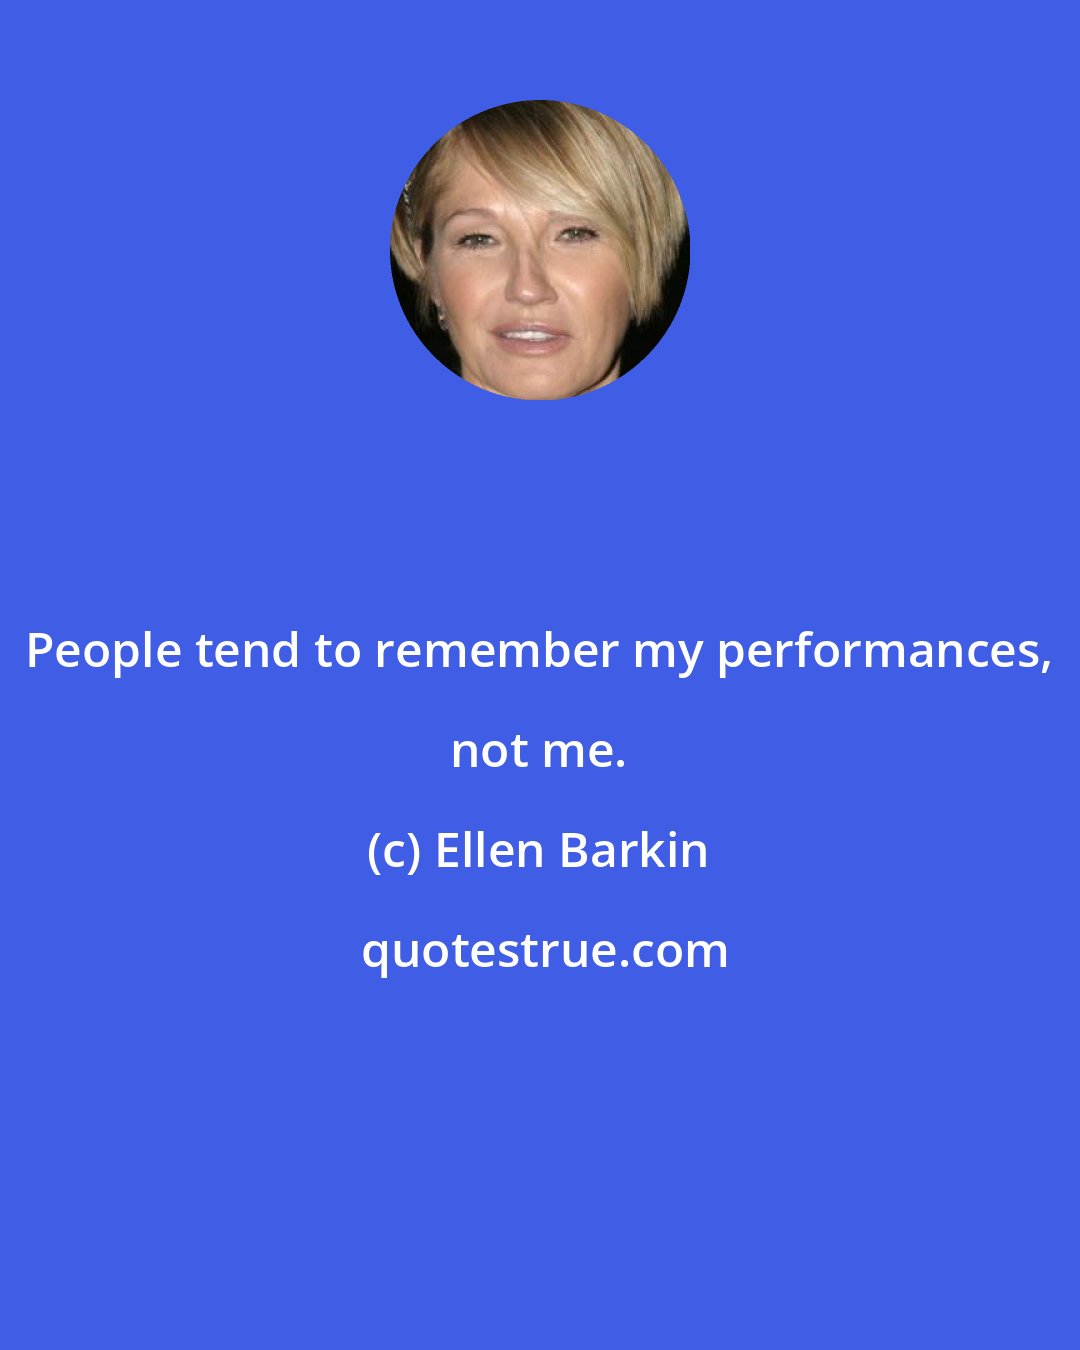 Ellen Barkin: People tend to remember my performances, not me.